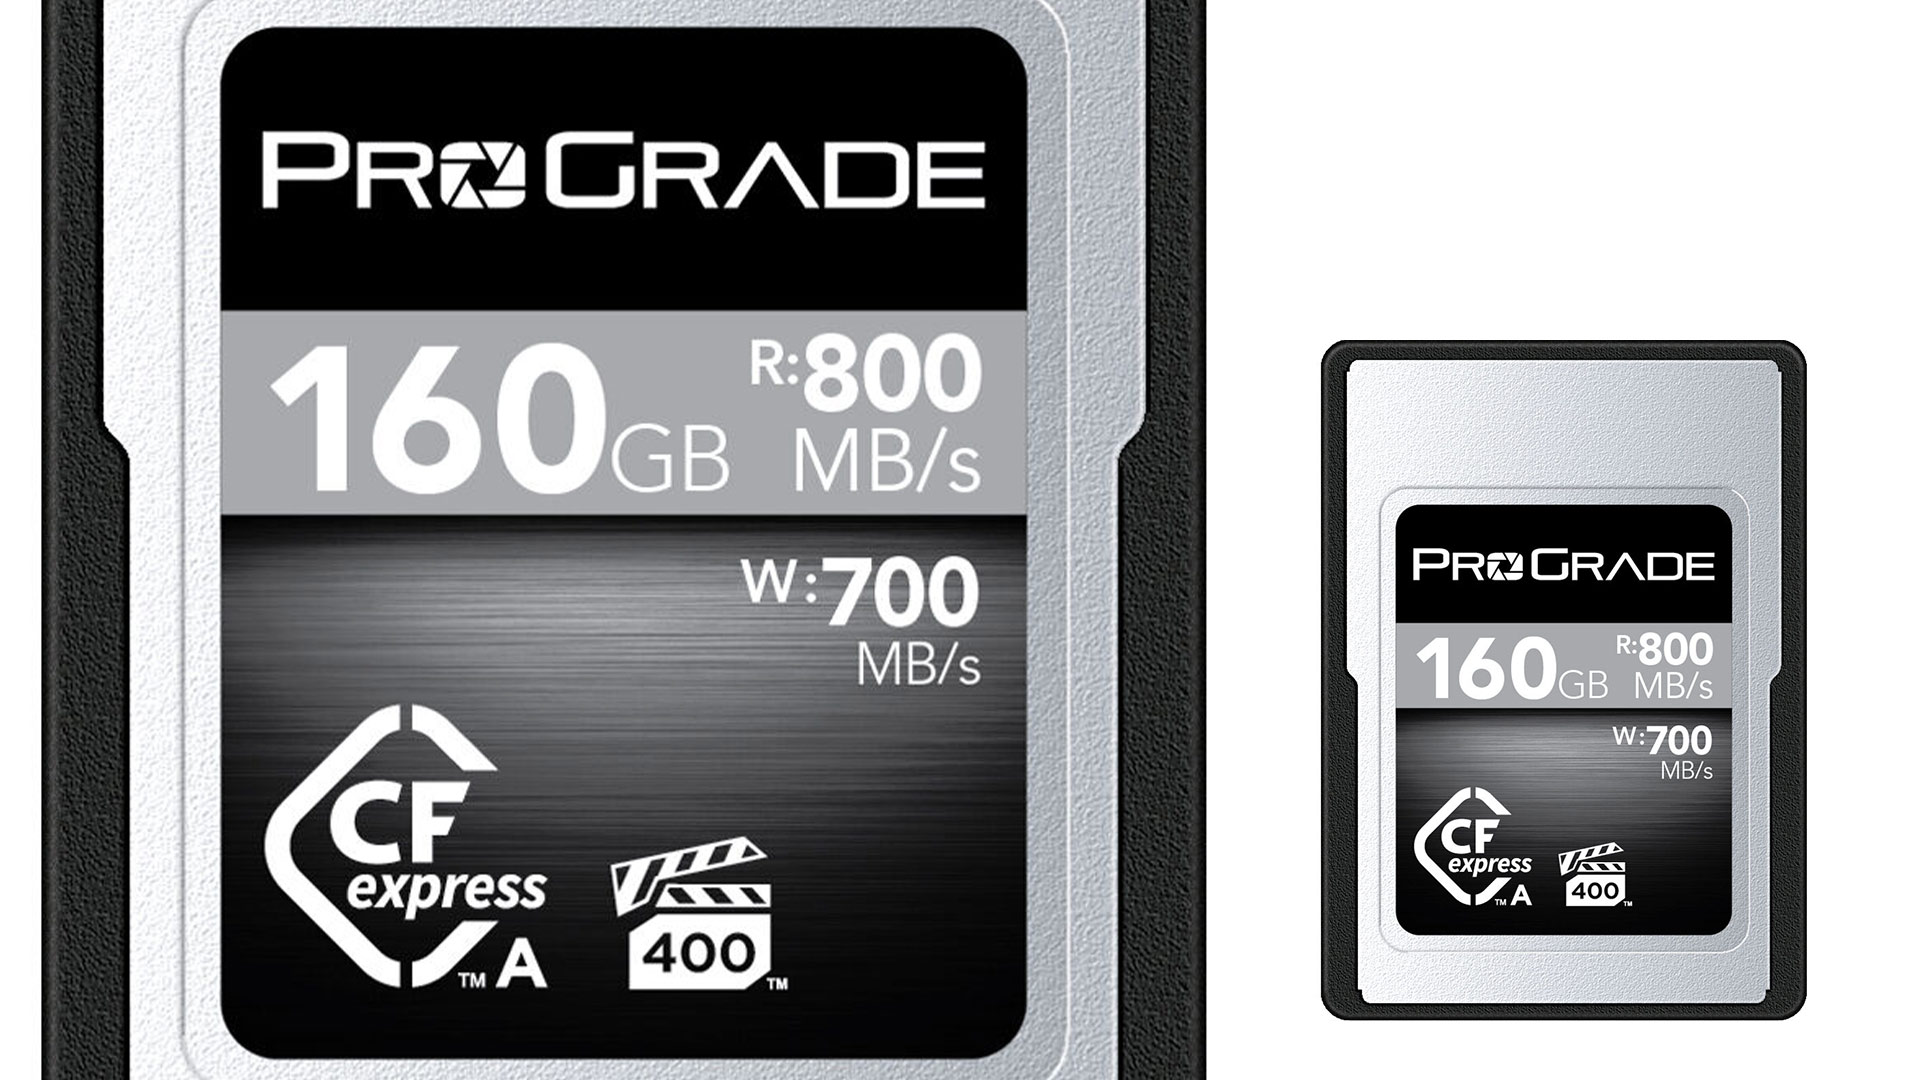 ProGrade 160GB CFexpress Type A Cobalt Memory Cards - now 